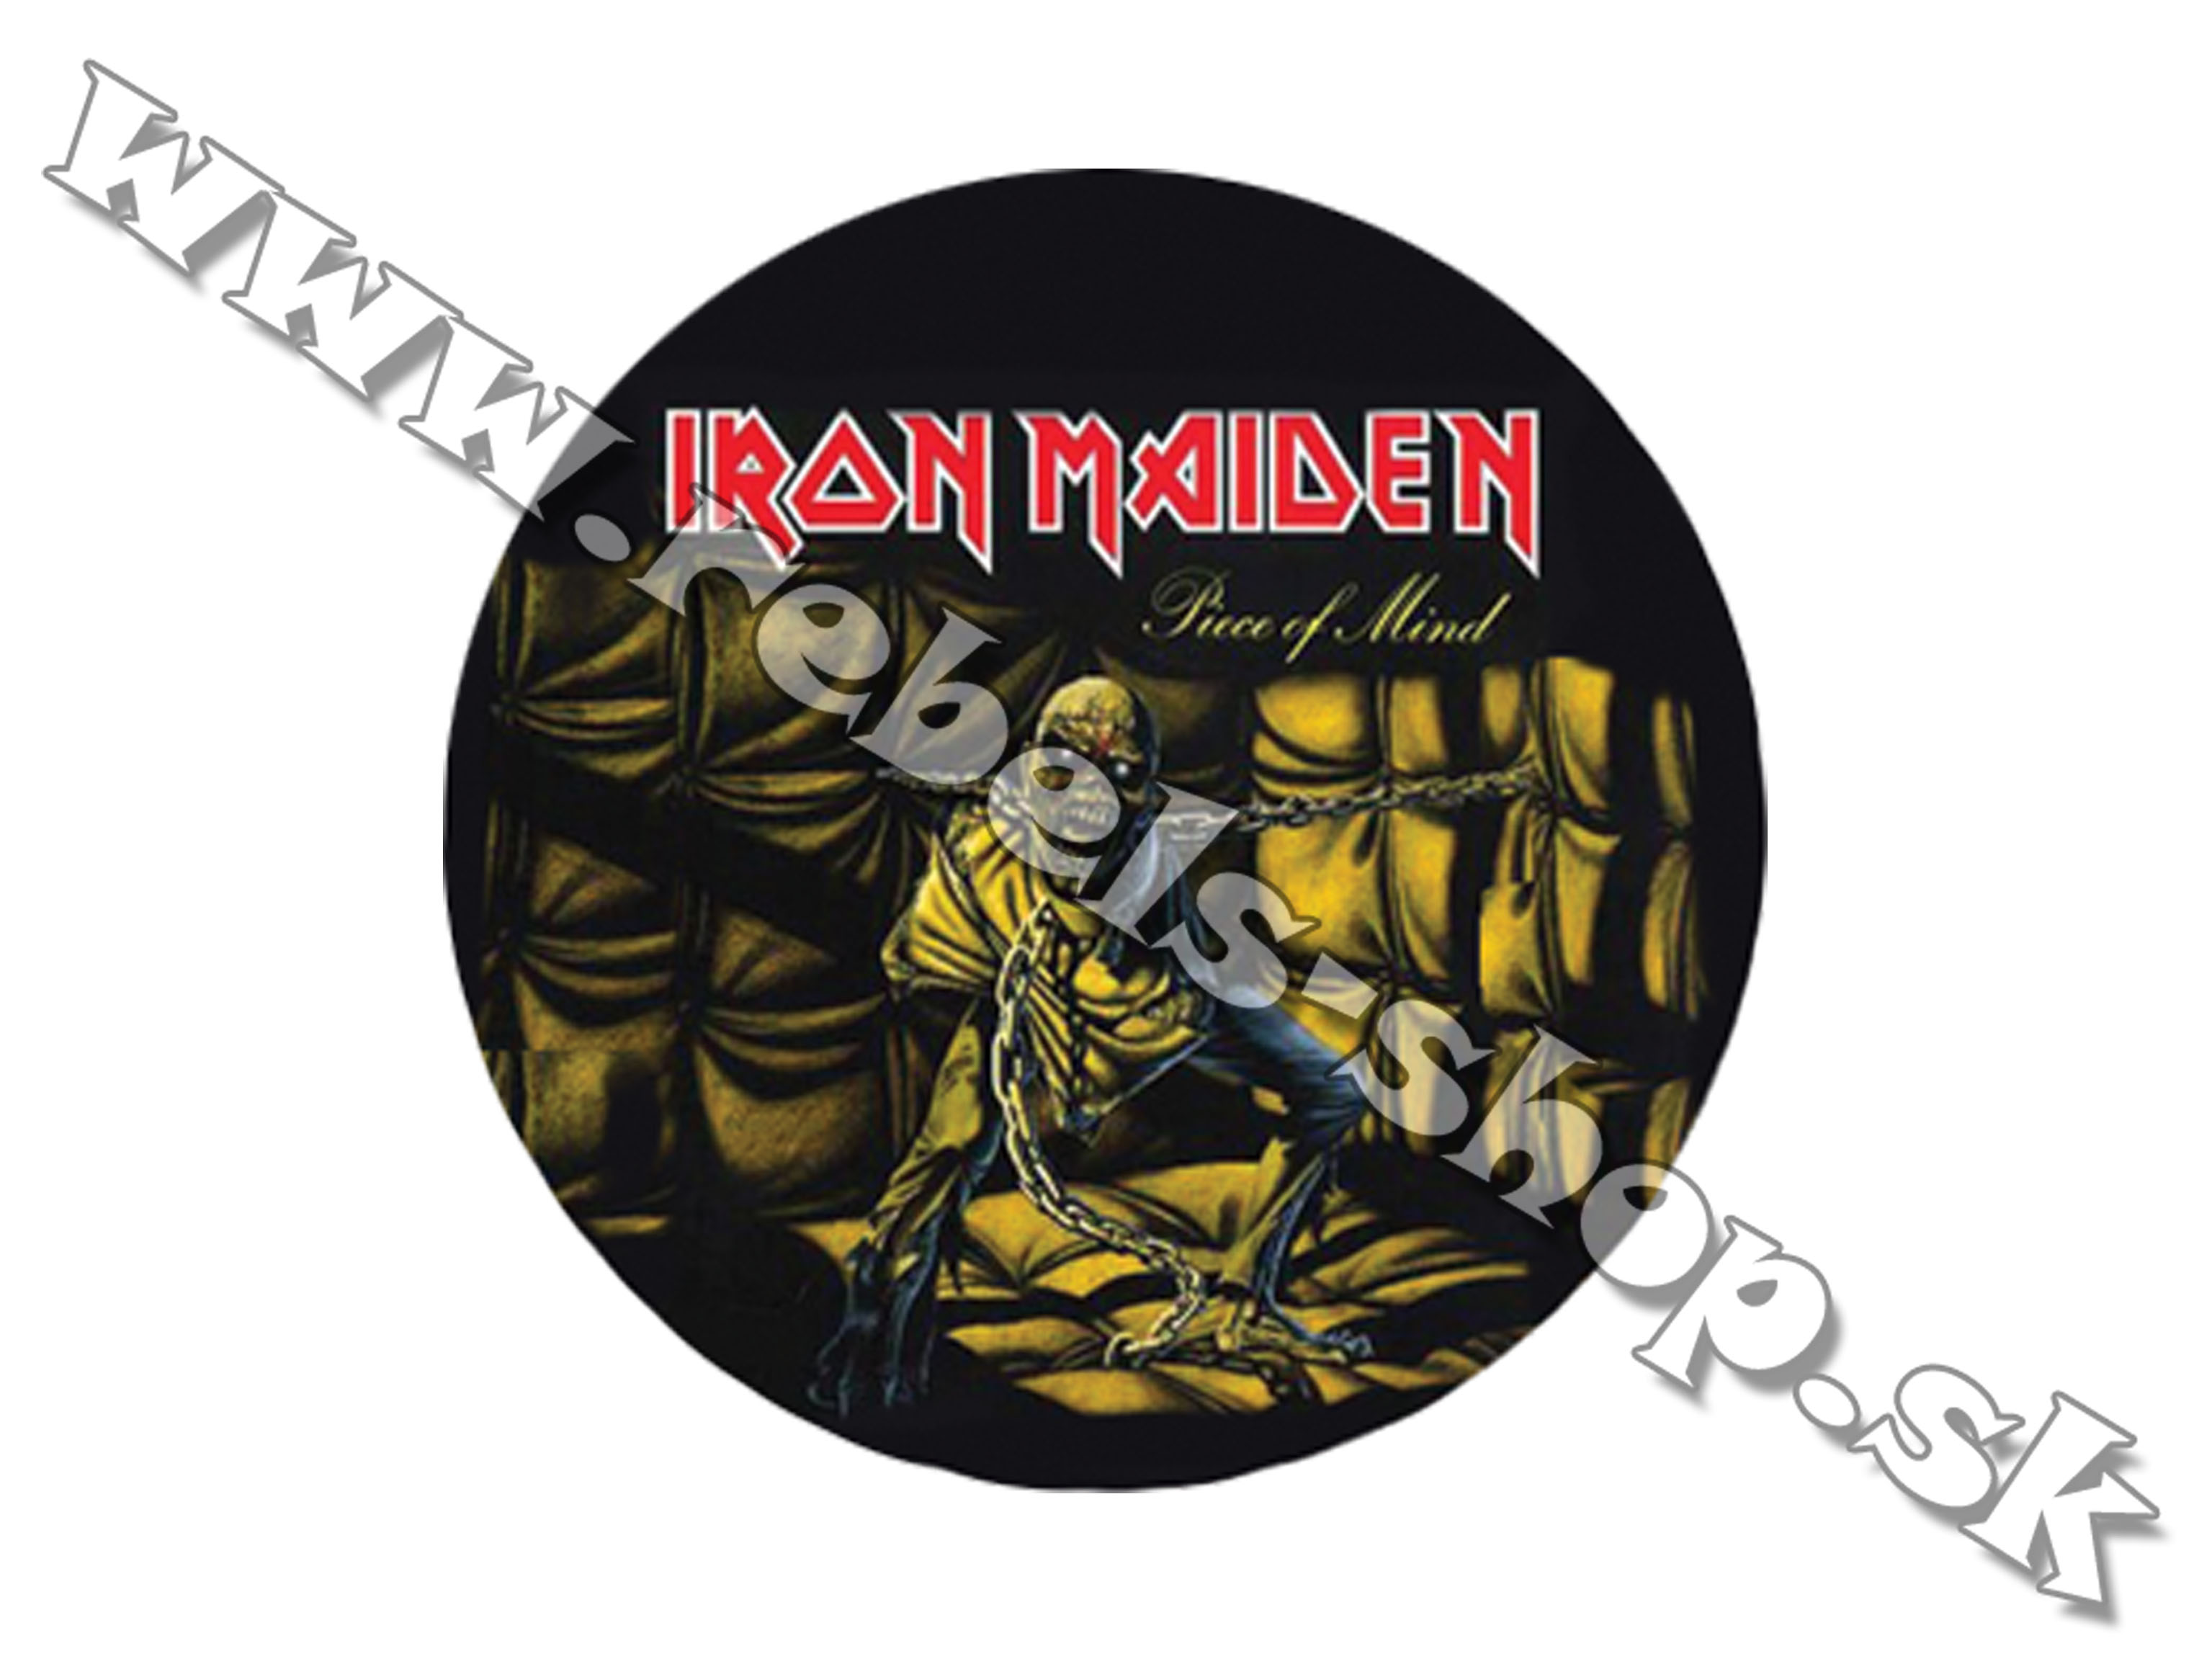 Odznak "Iron Maiden"